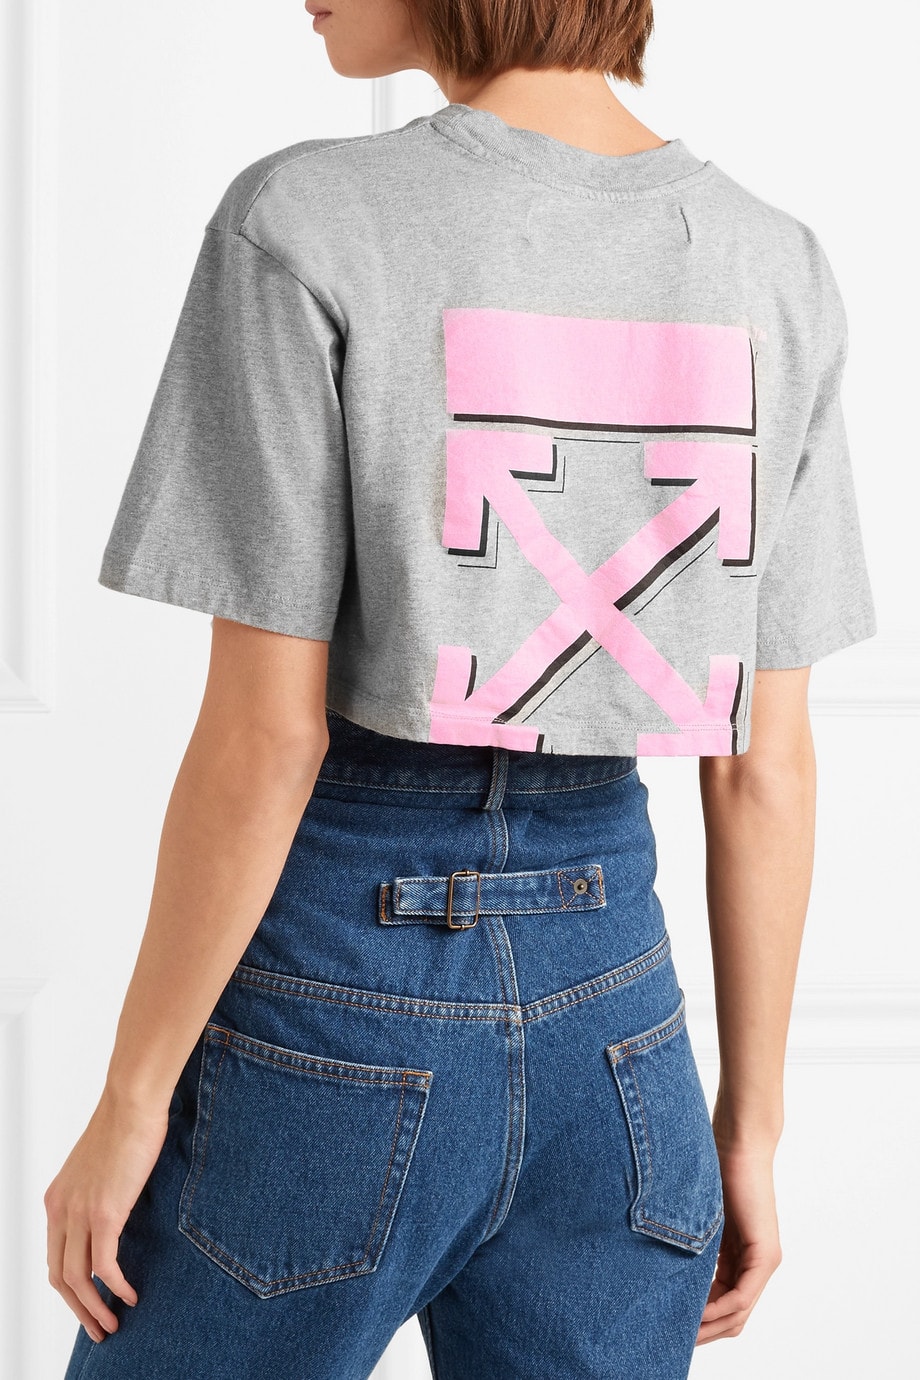 Off-White™ International Women's Day T-Shirt Net-A-Porter Exclusive Virgil Abloh Crop Top Pink March 8 